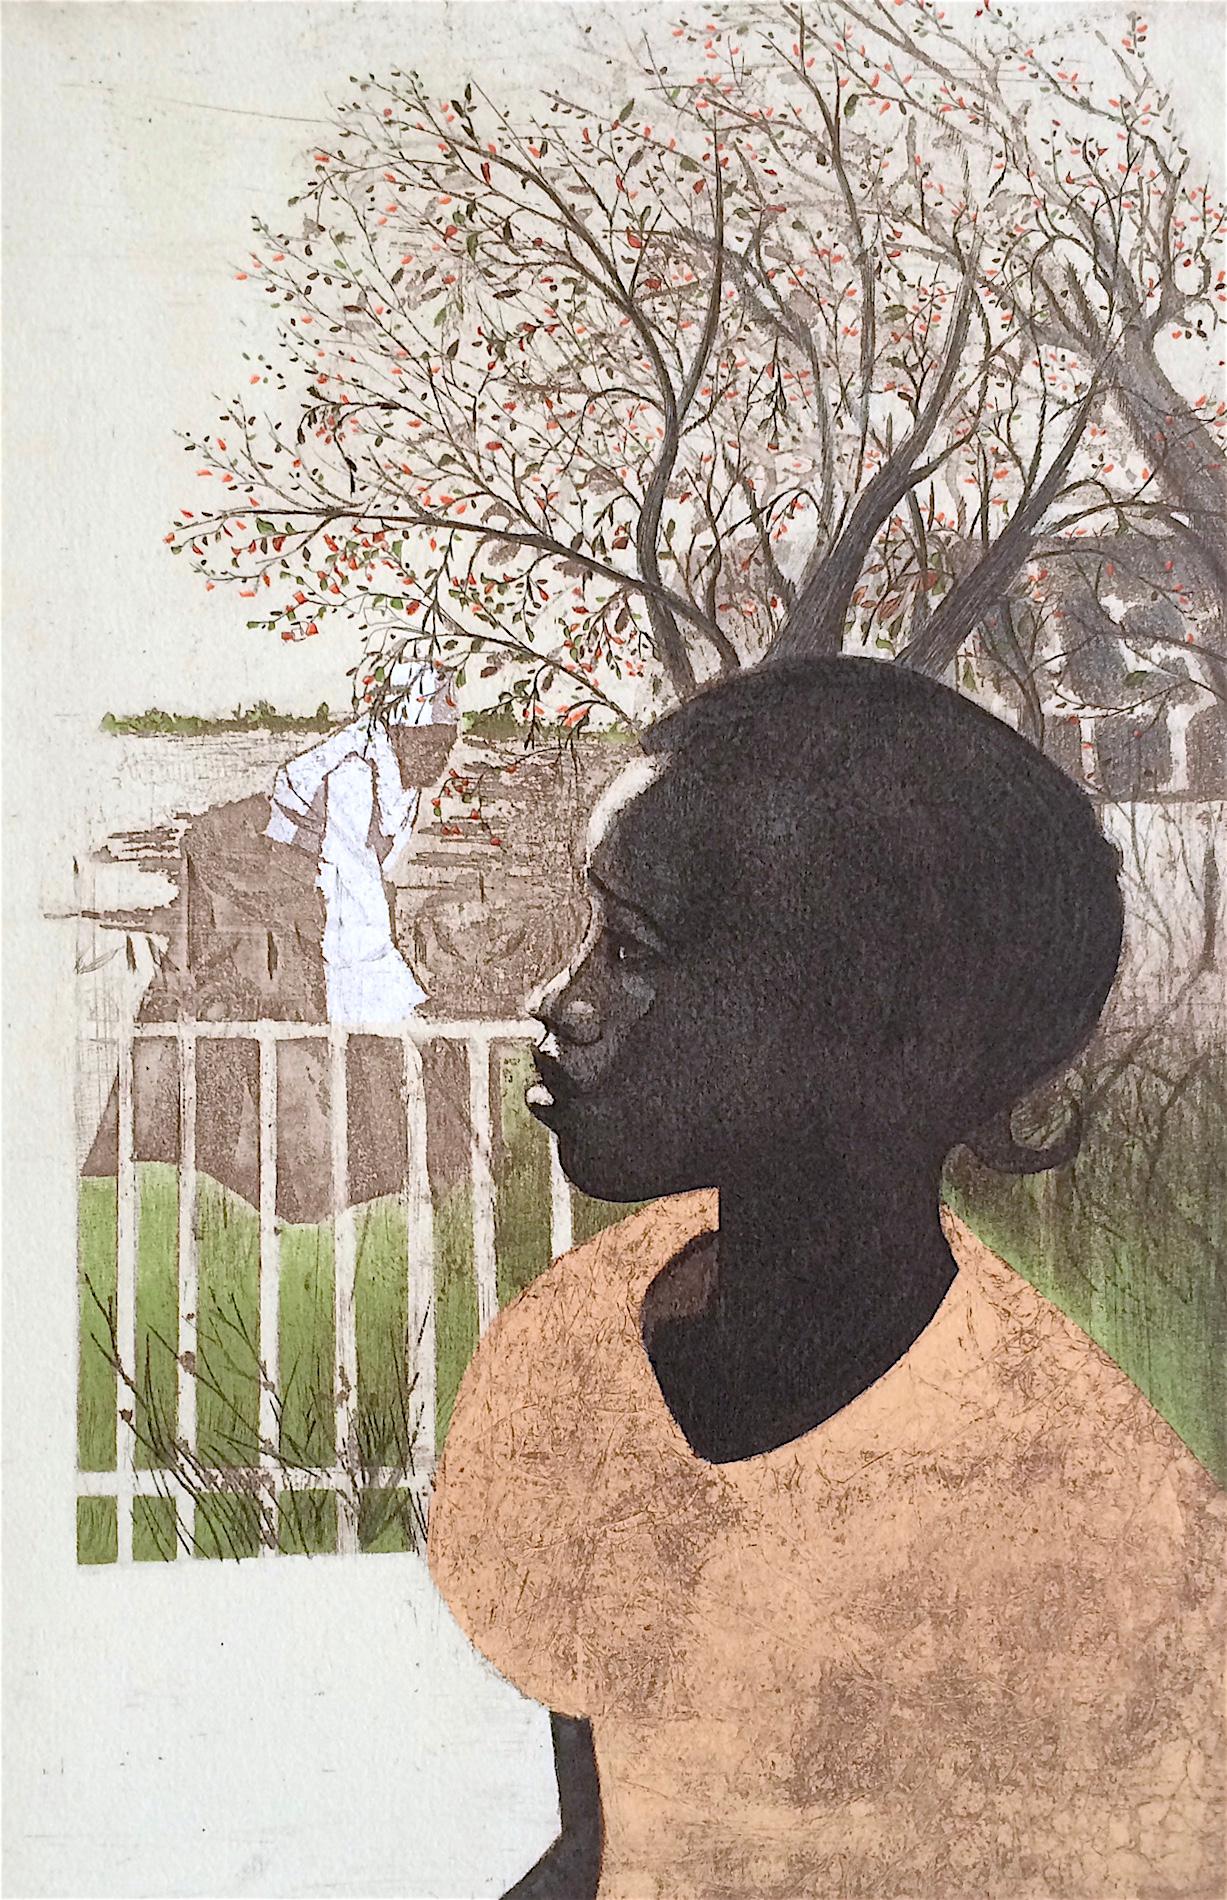 Ernest Crichlow Portrait Print - NEW DREAMS Original Lithograph, Black History, African American Women